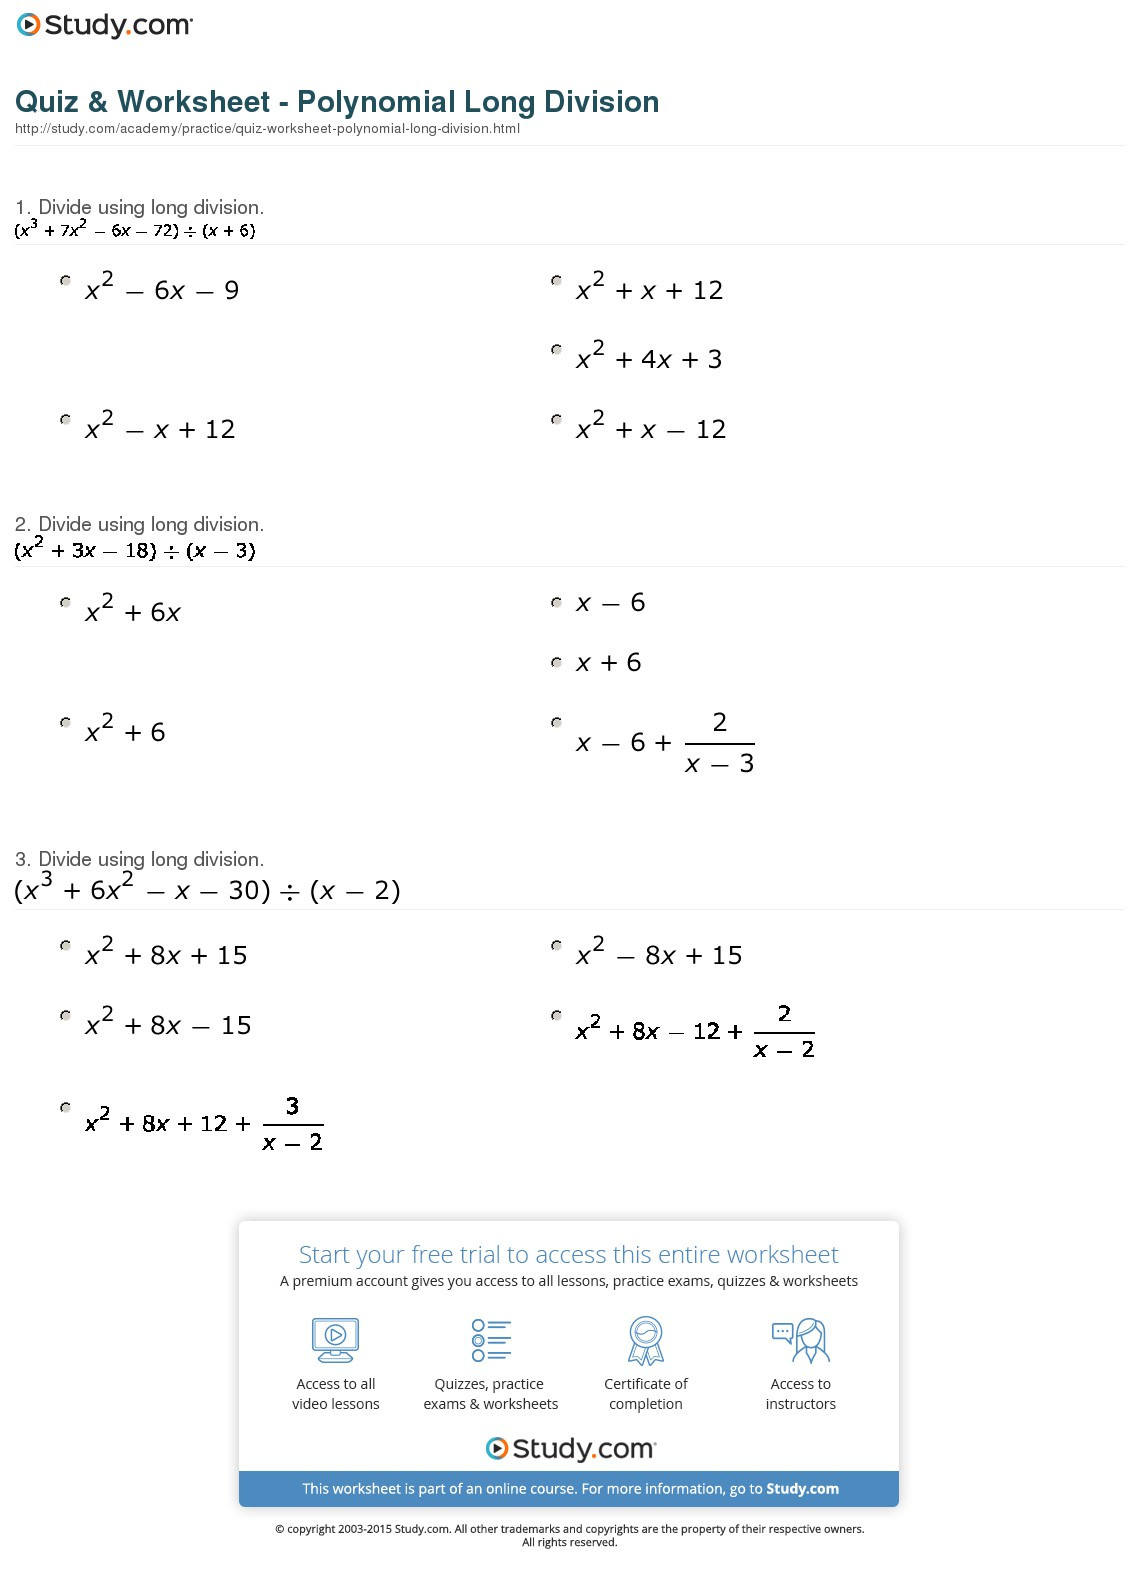 quiz-worksheet-polynomial-long-division-study-db-excel